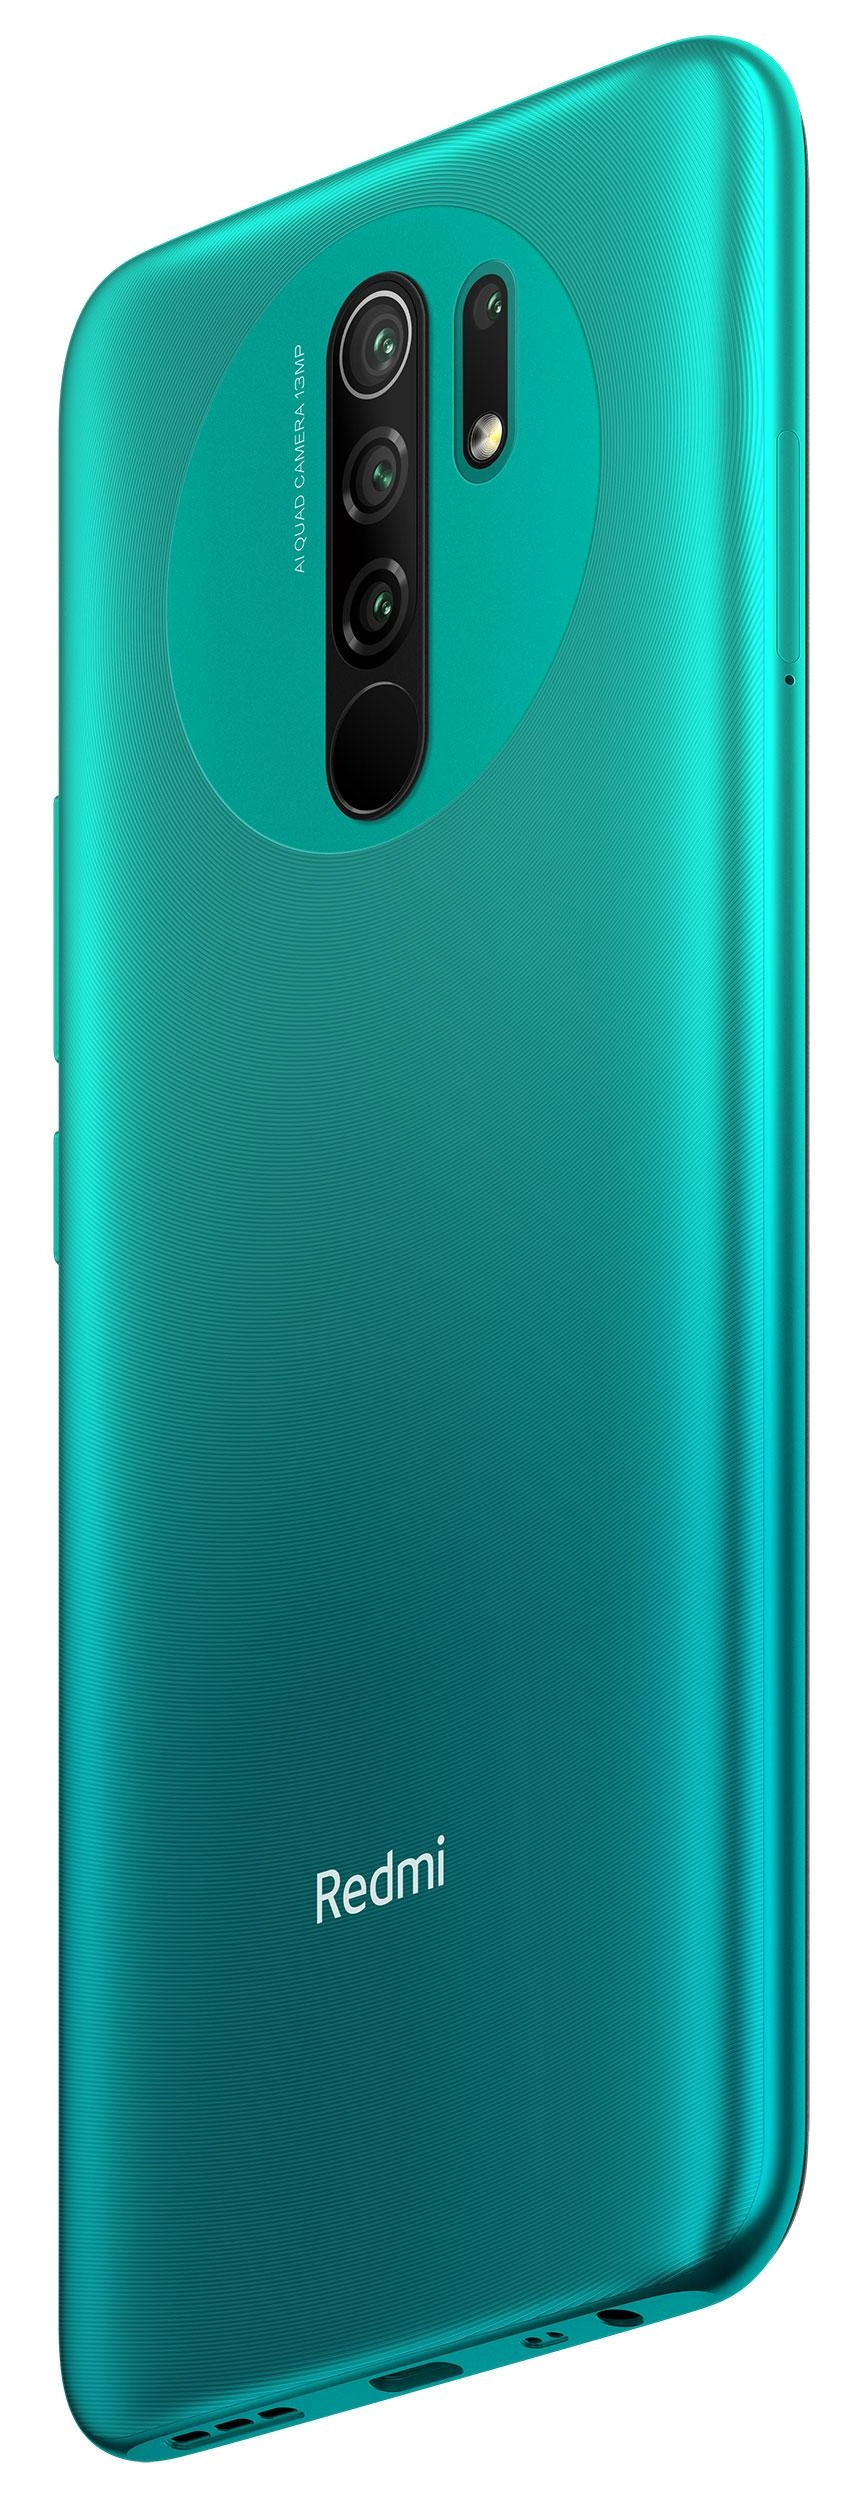 Смартфон Xiaomi Redmi 9 3/32Gb Green заказать